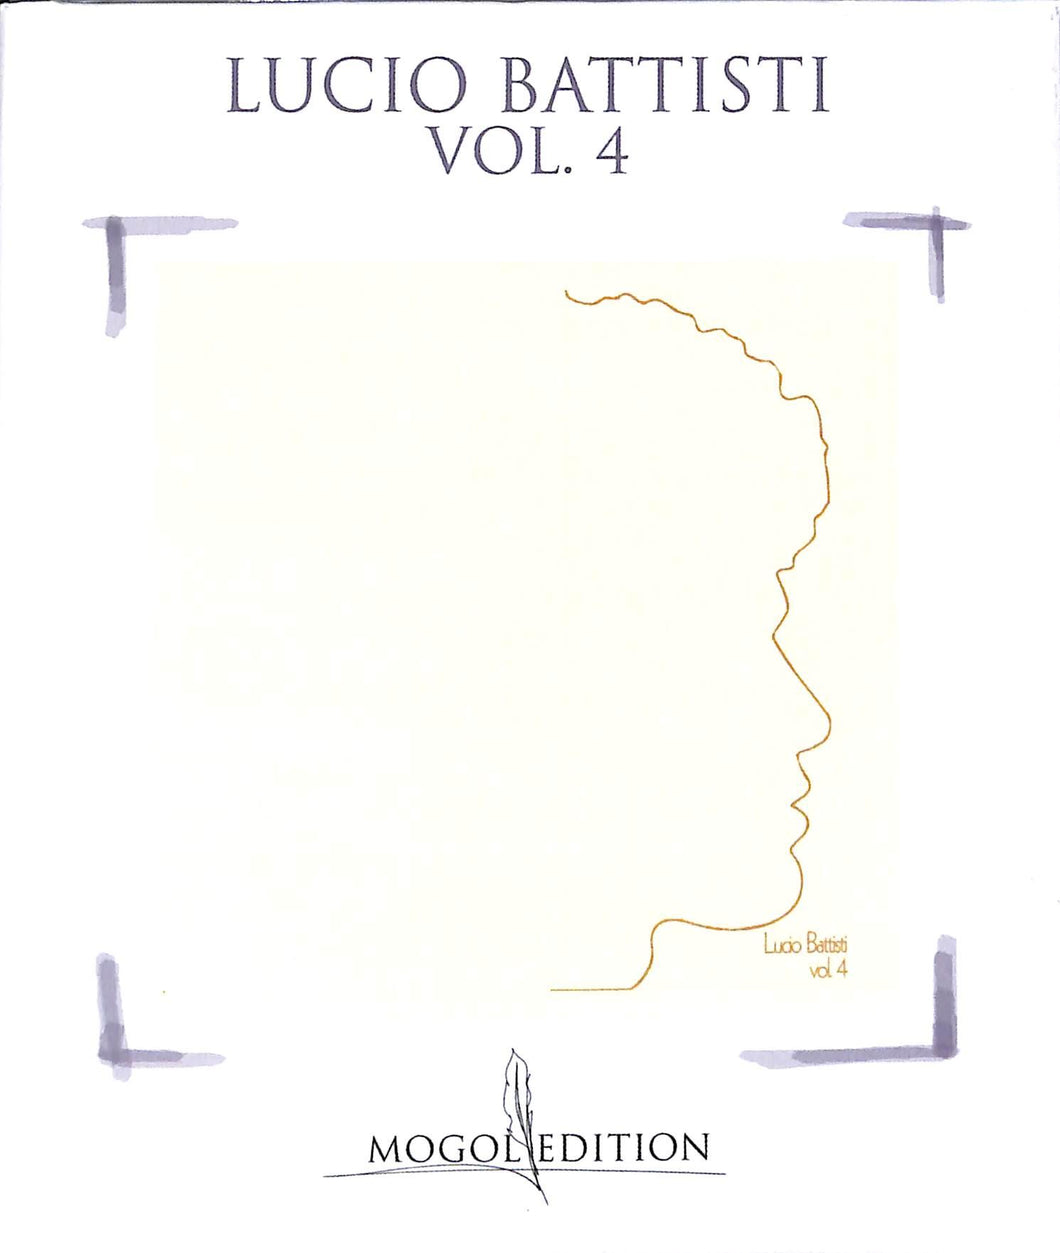 Cd - Vol. 4 / Lucio Battisti  Mogol edition